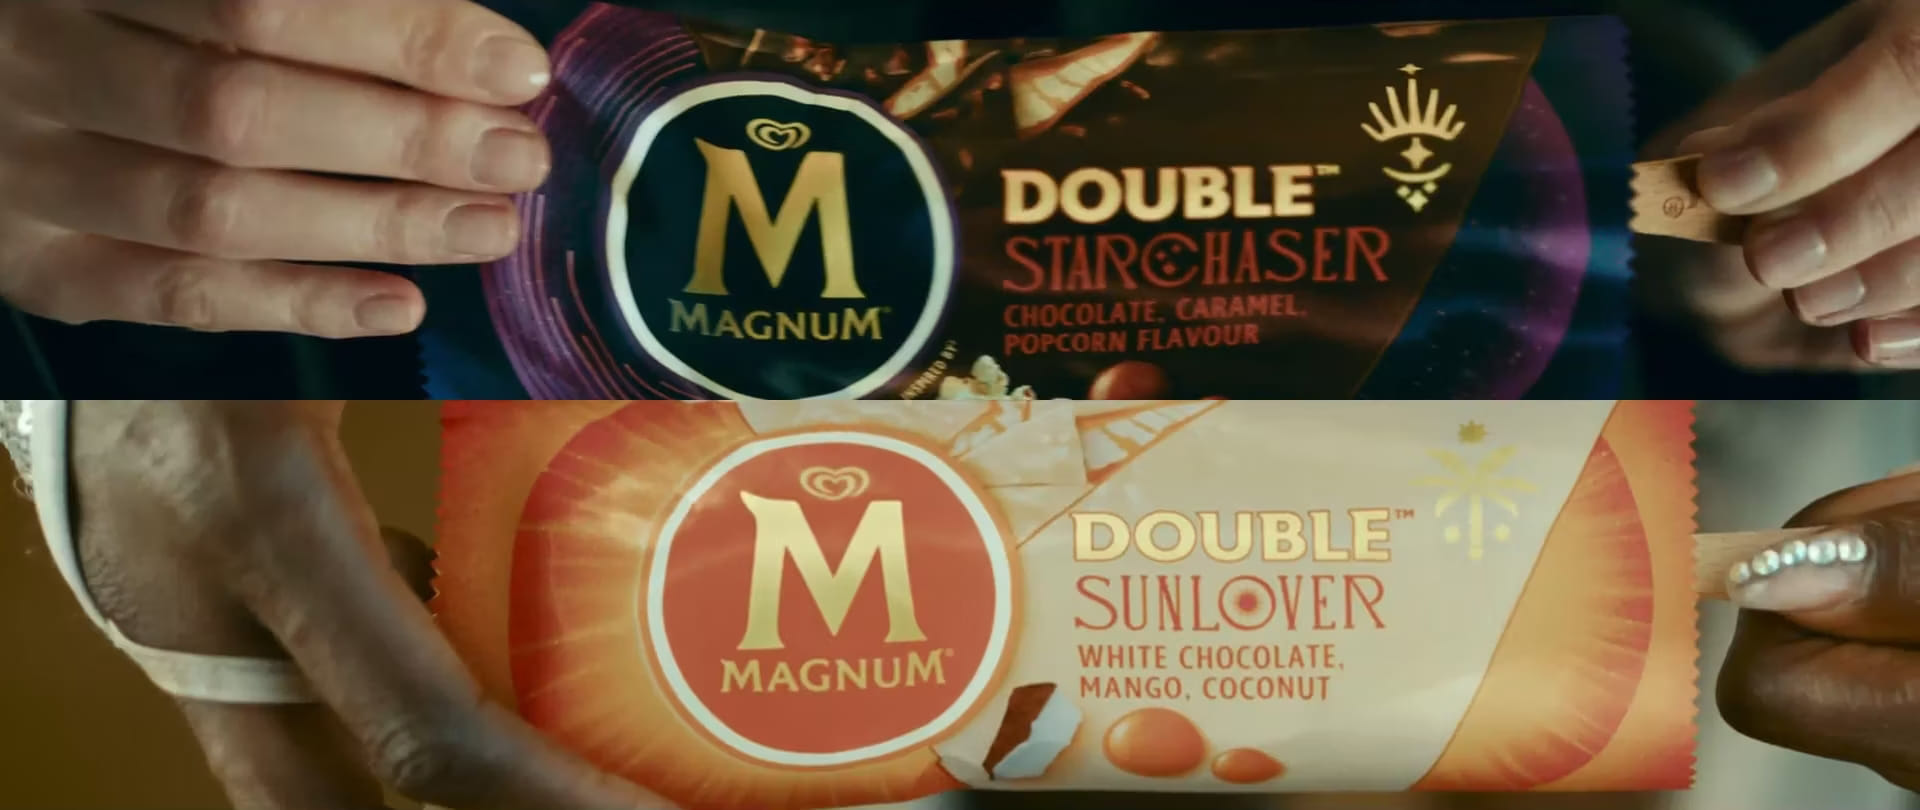 Magnum Sunlover & Starchaser